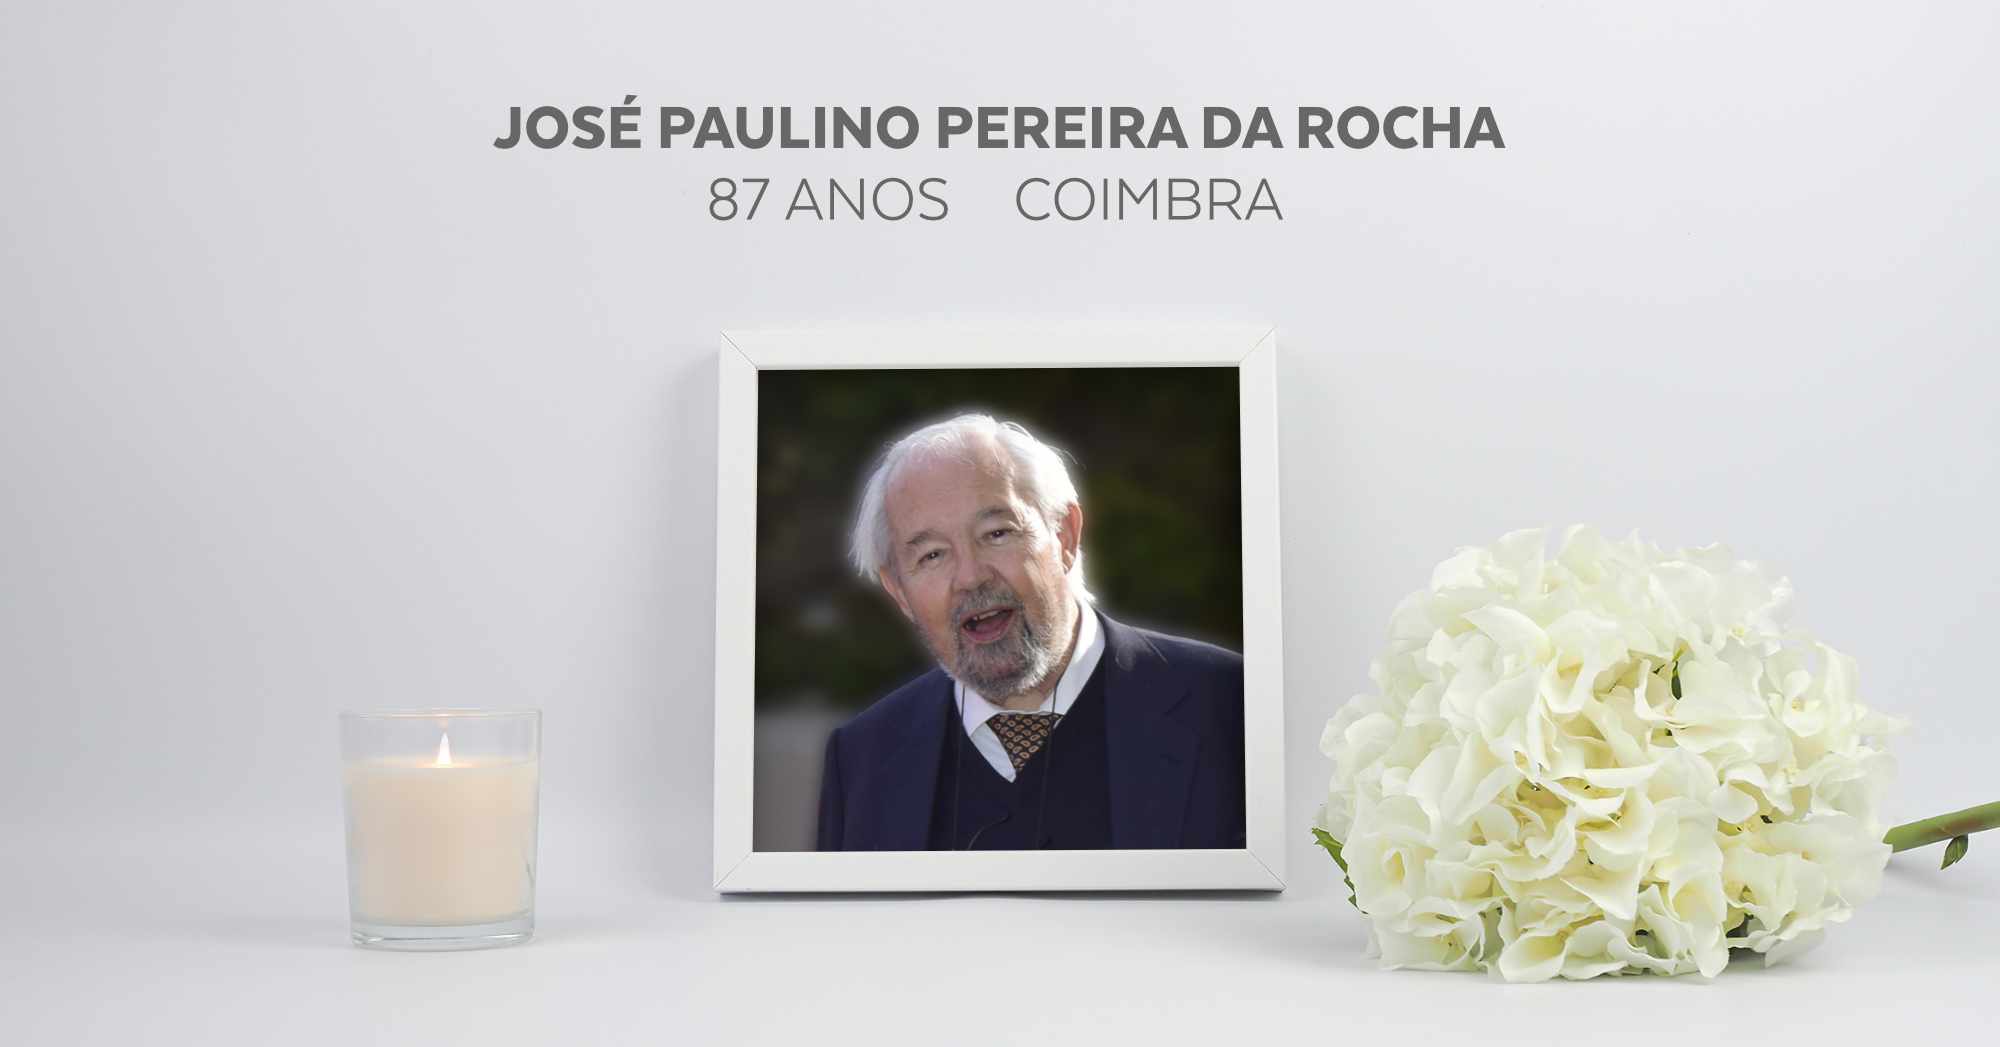 José Paulino Pereira da Rocha